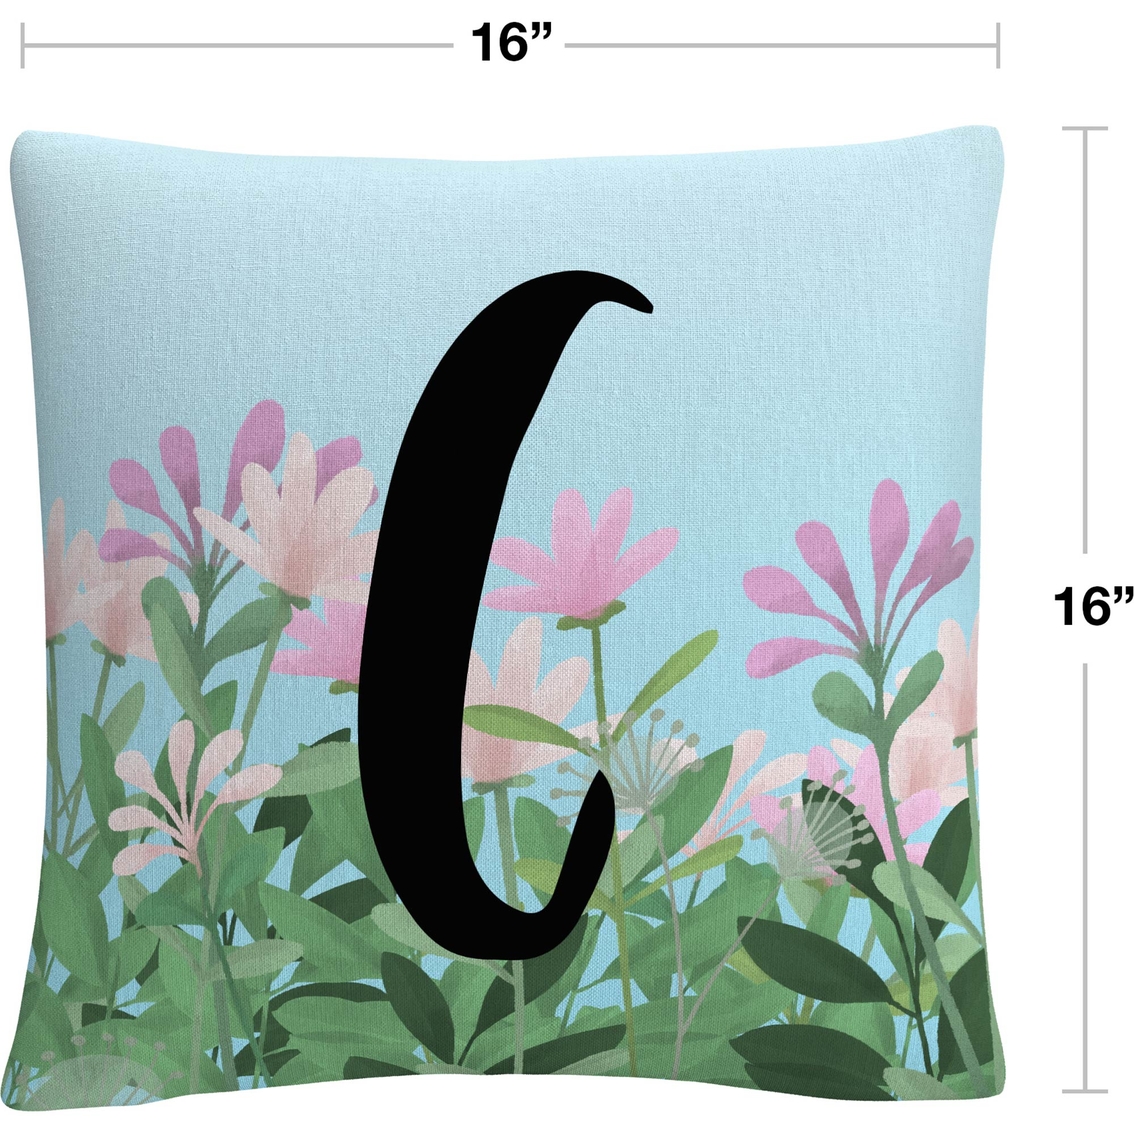 Trademark Fine Art Floral Garden Letter Illustration Decorative Throw Pillow - Image 2 of 4